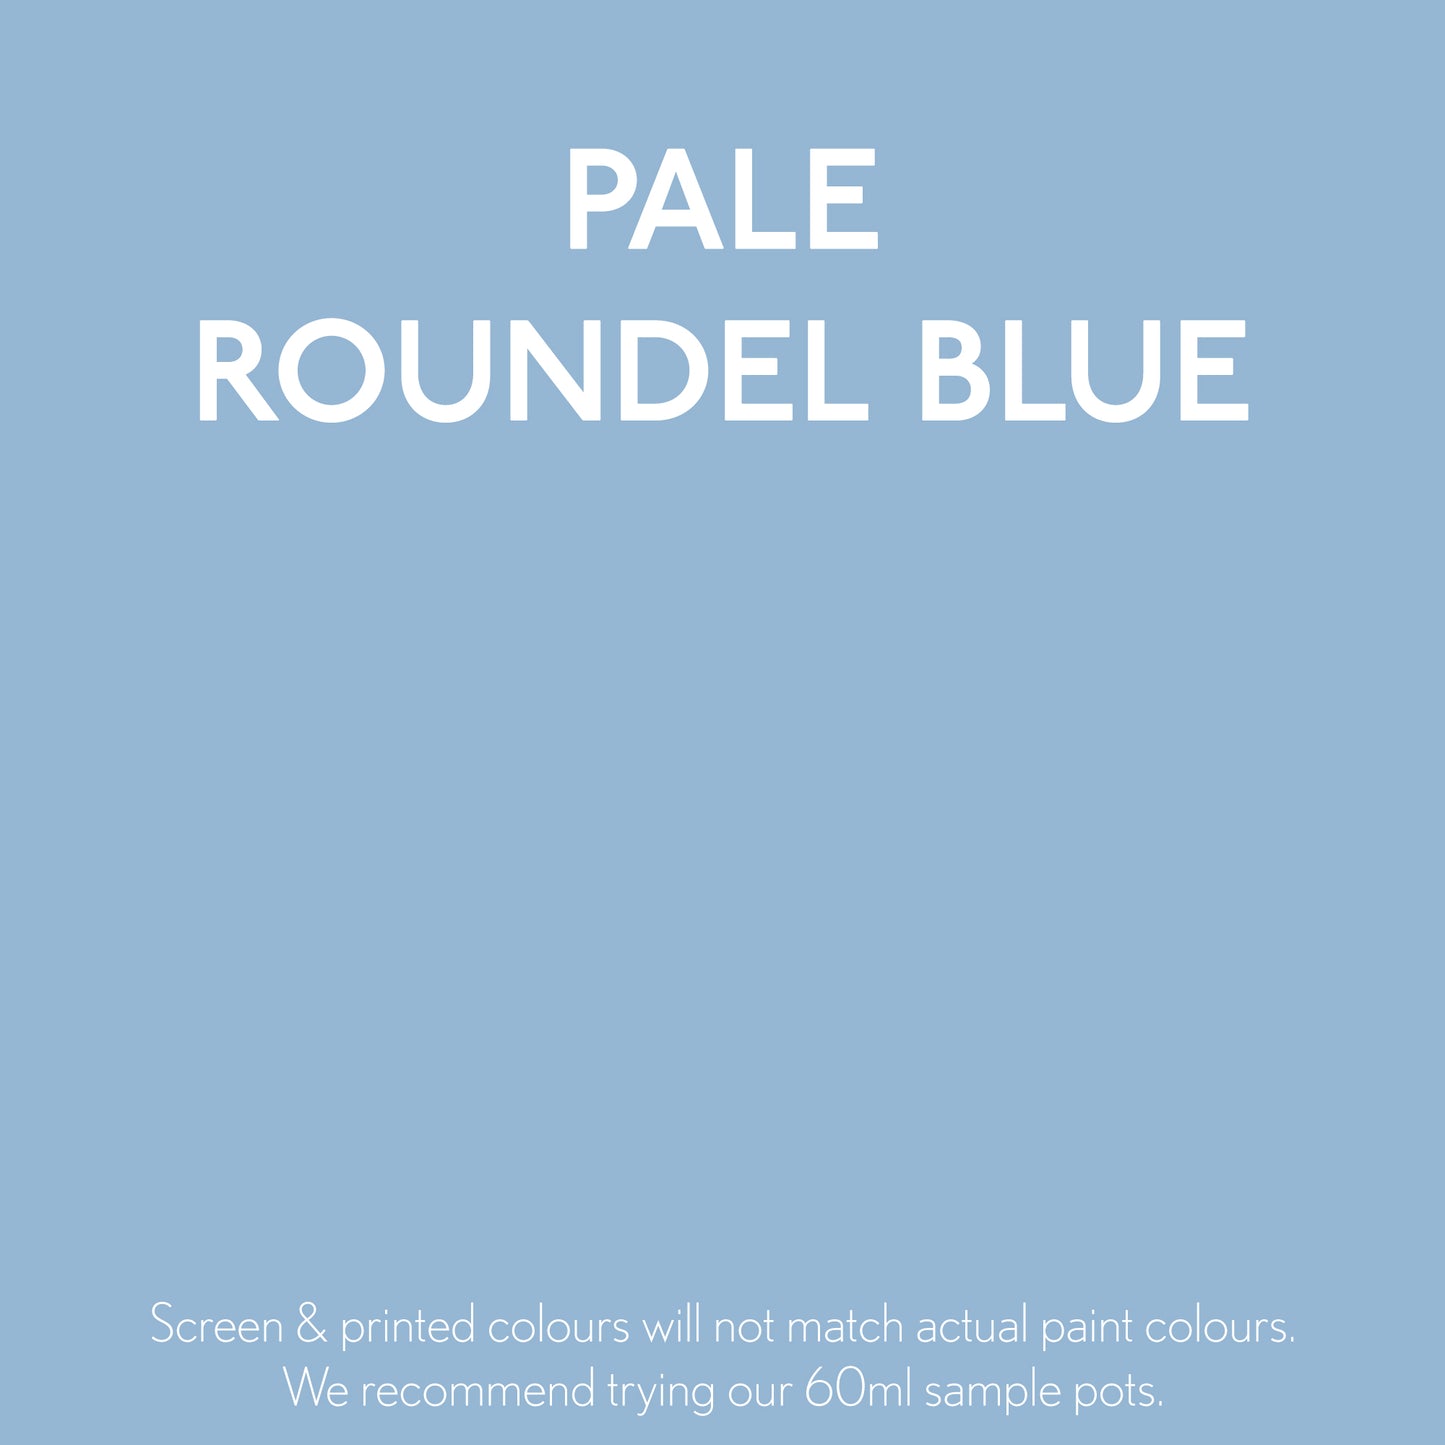 Pale Roundel Blue